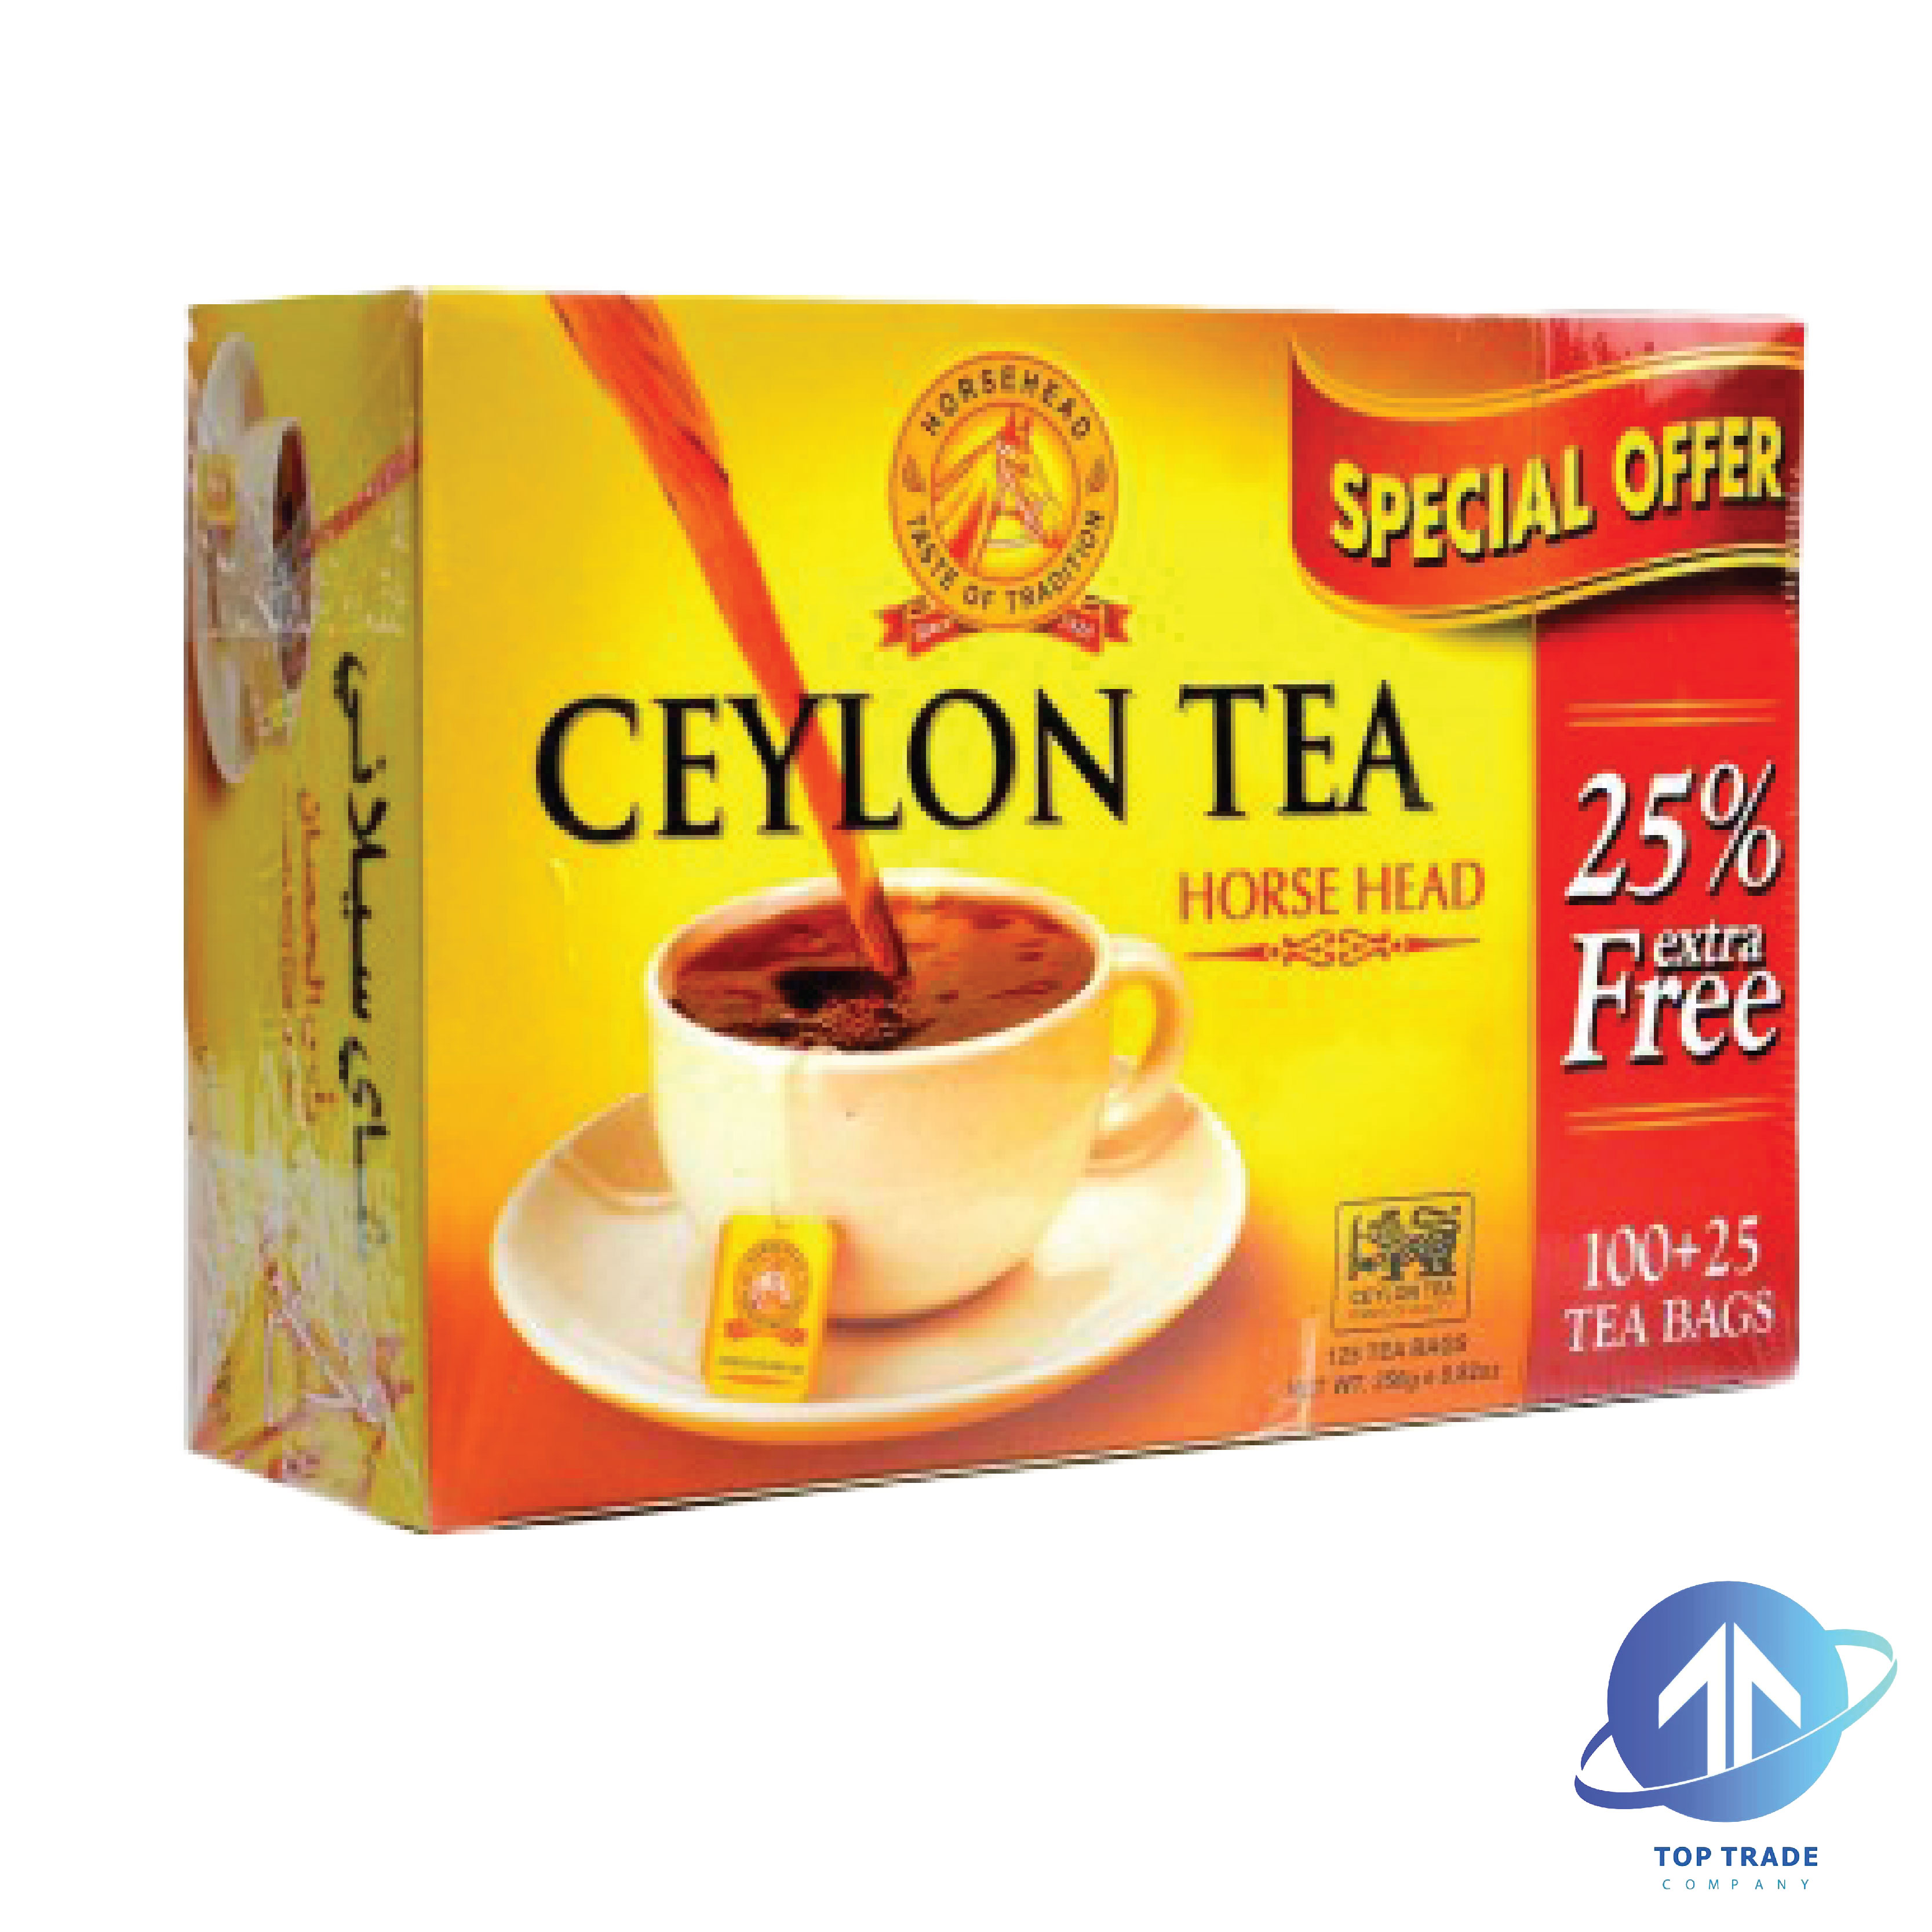 Horse Head Ceylon Tea bags X100 + 25 FREE